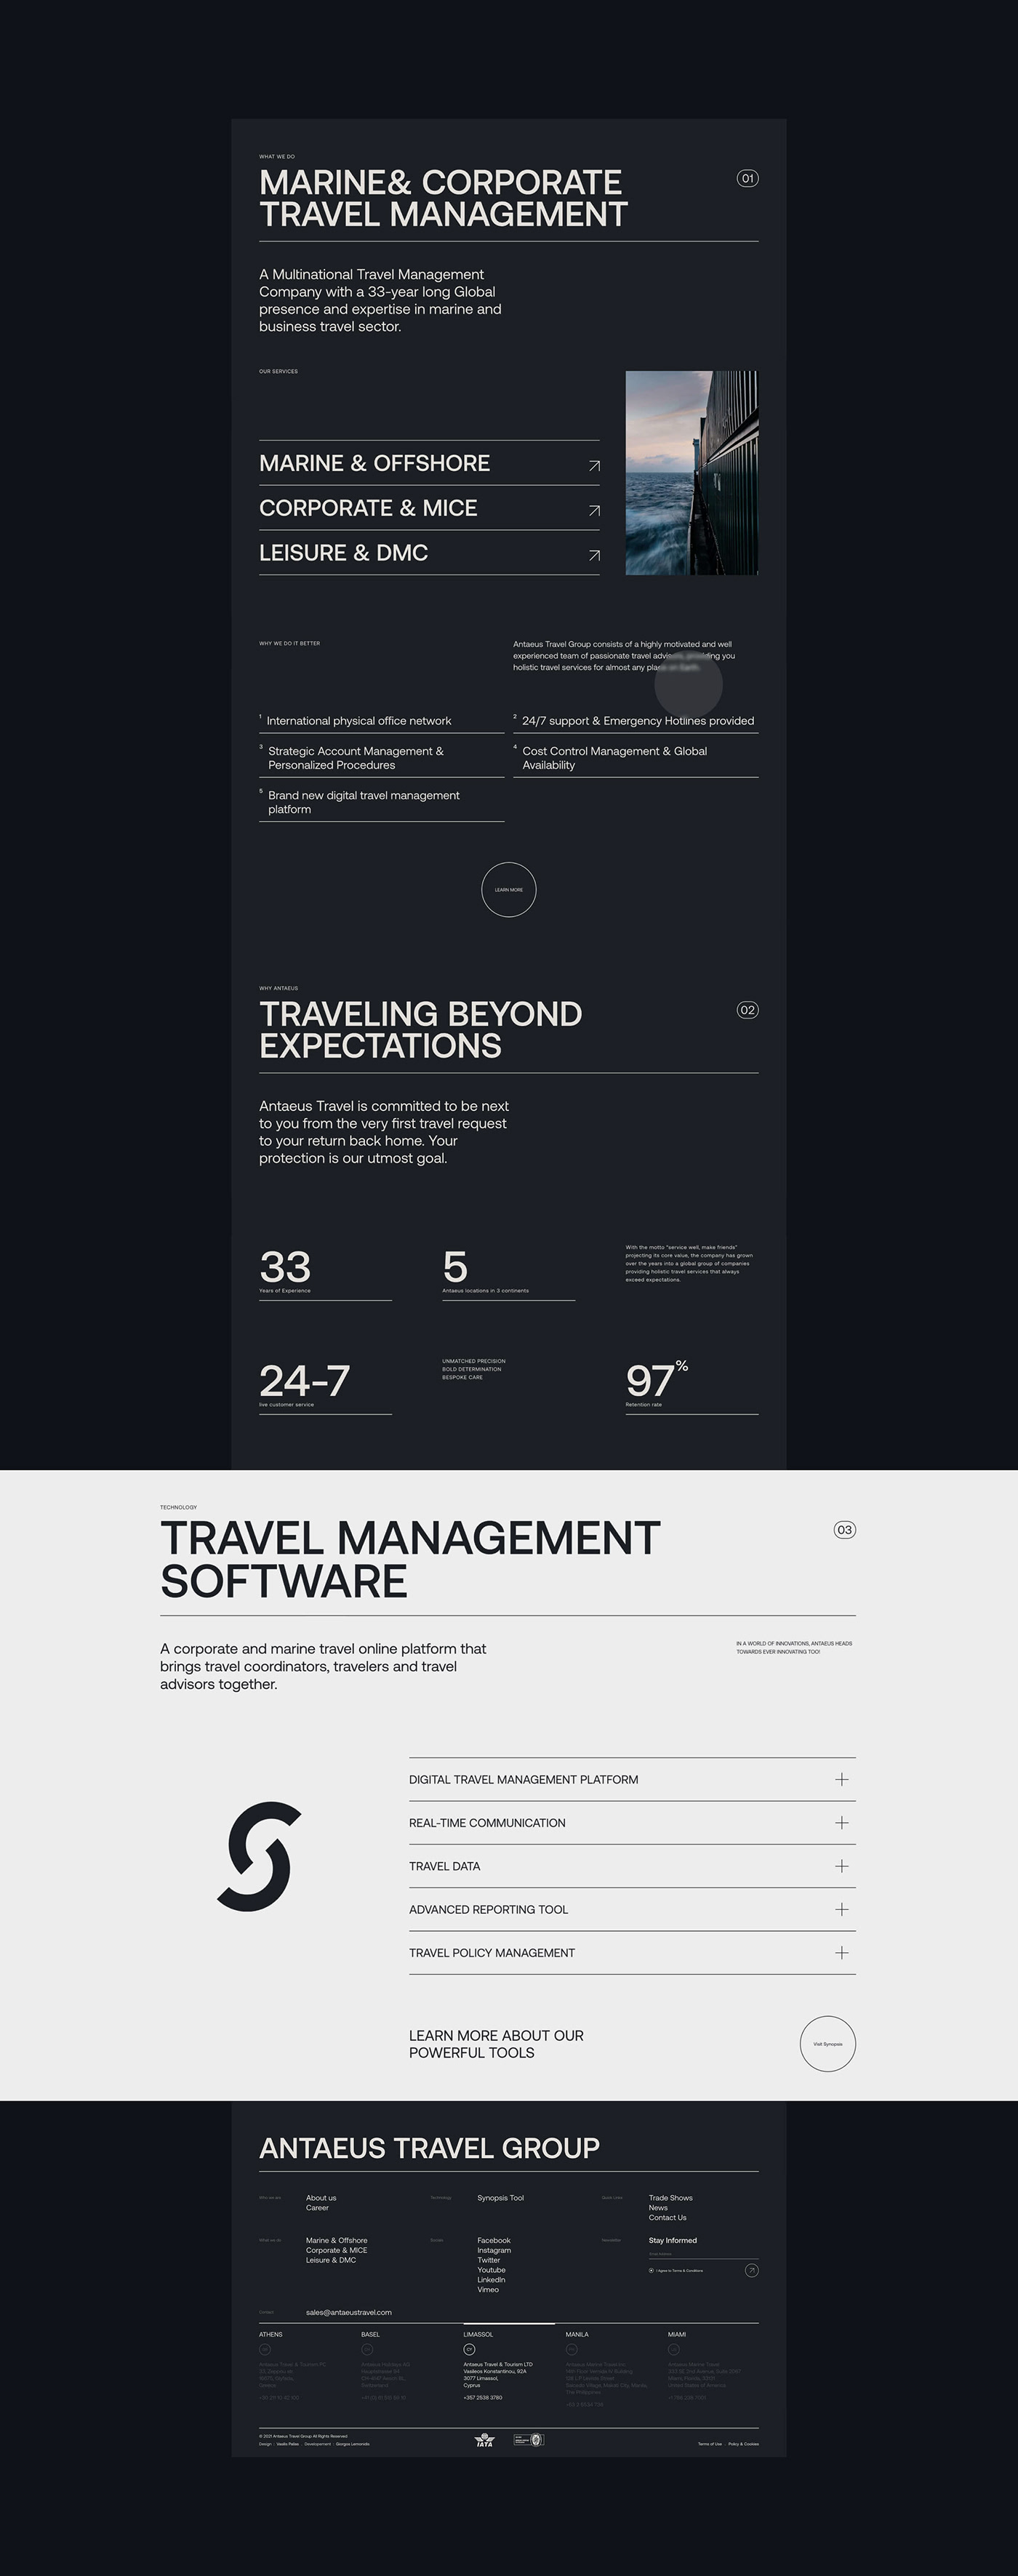 Travel travel agency corporate business darktheme black and white UI/UX Antaeus duocolor